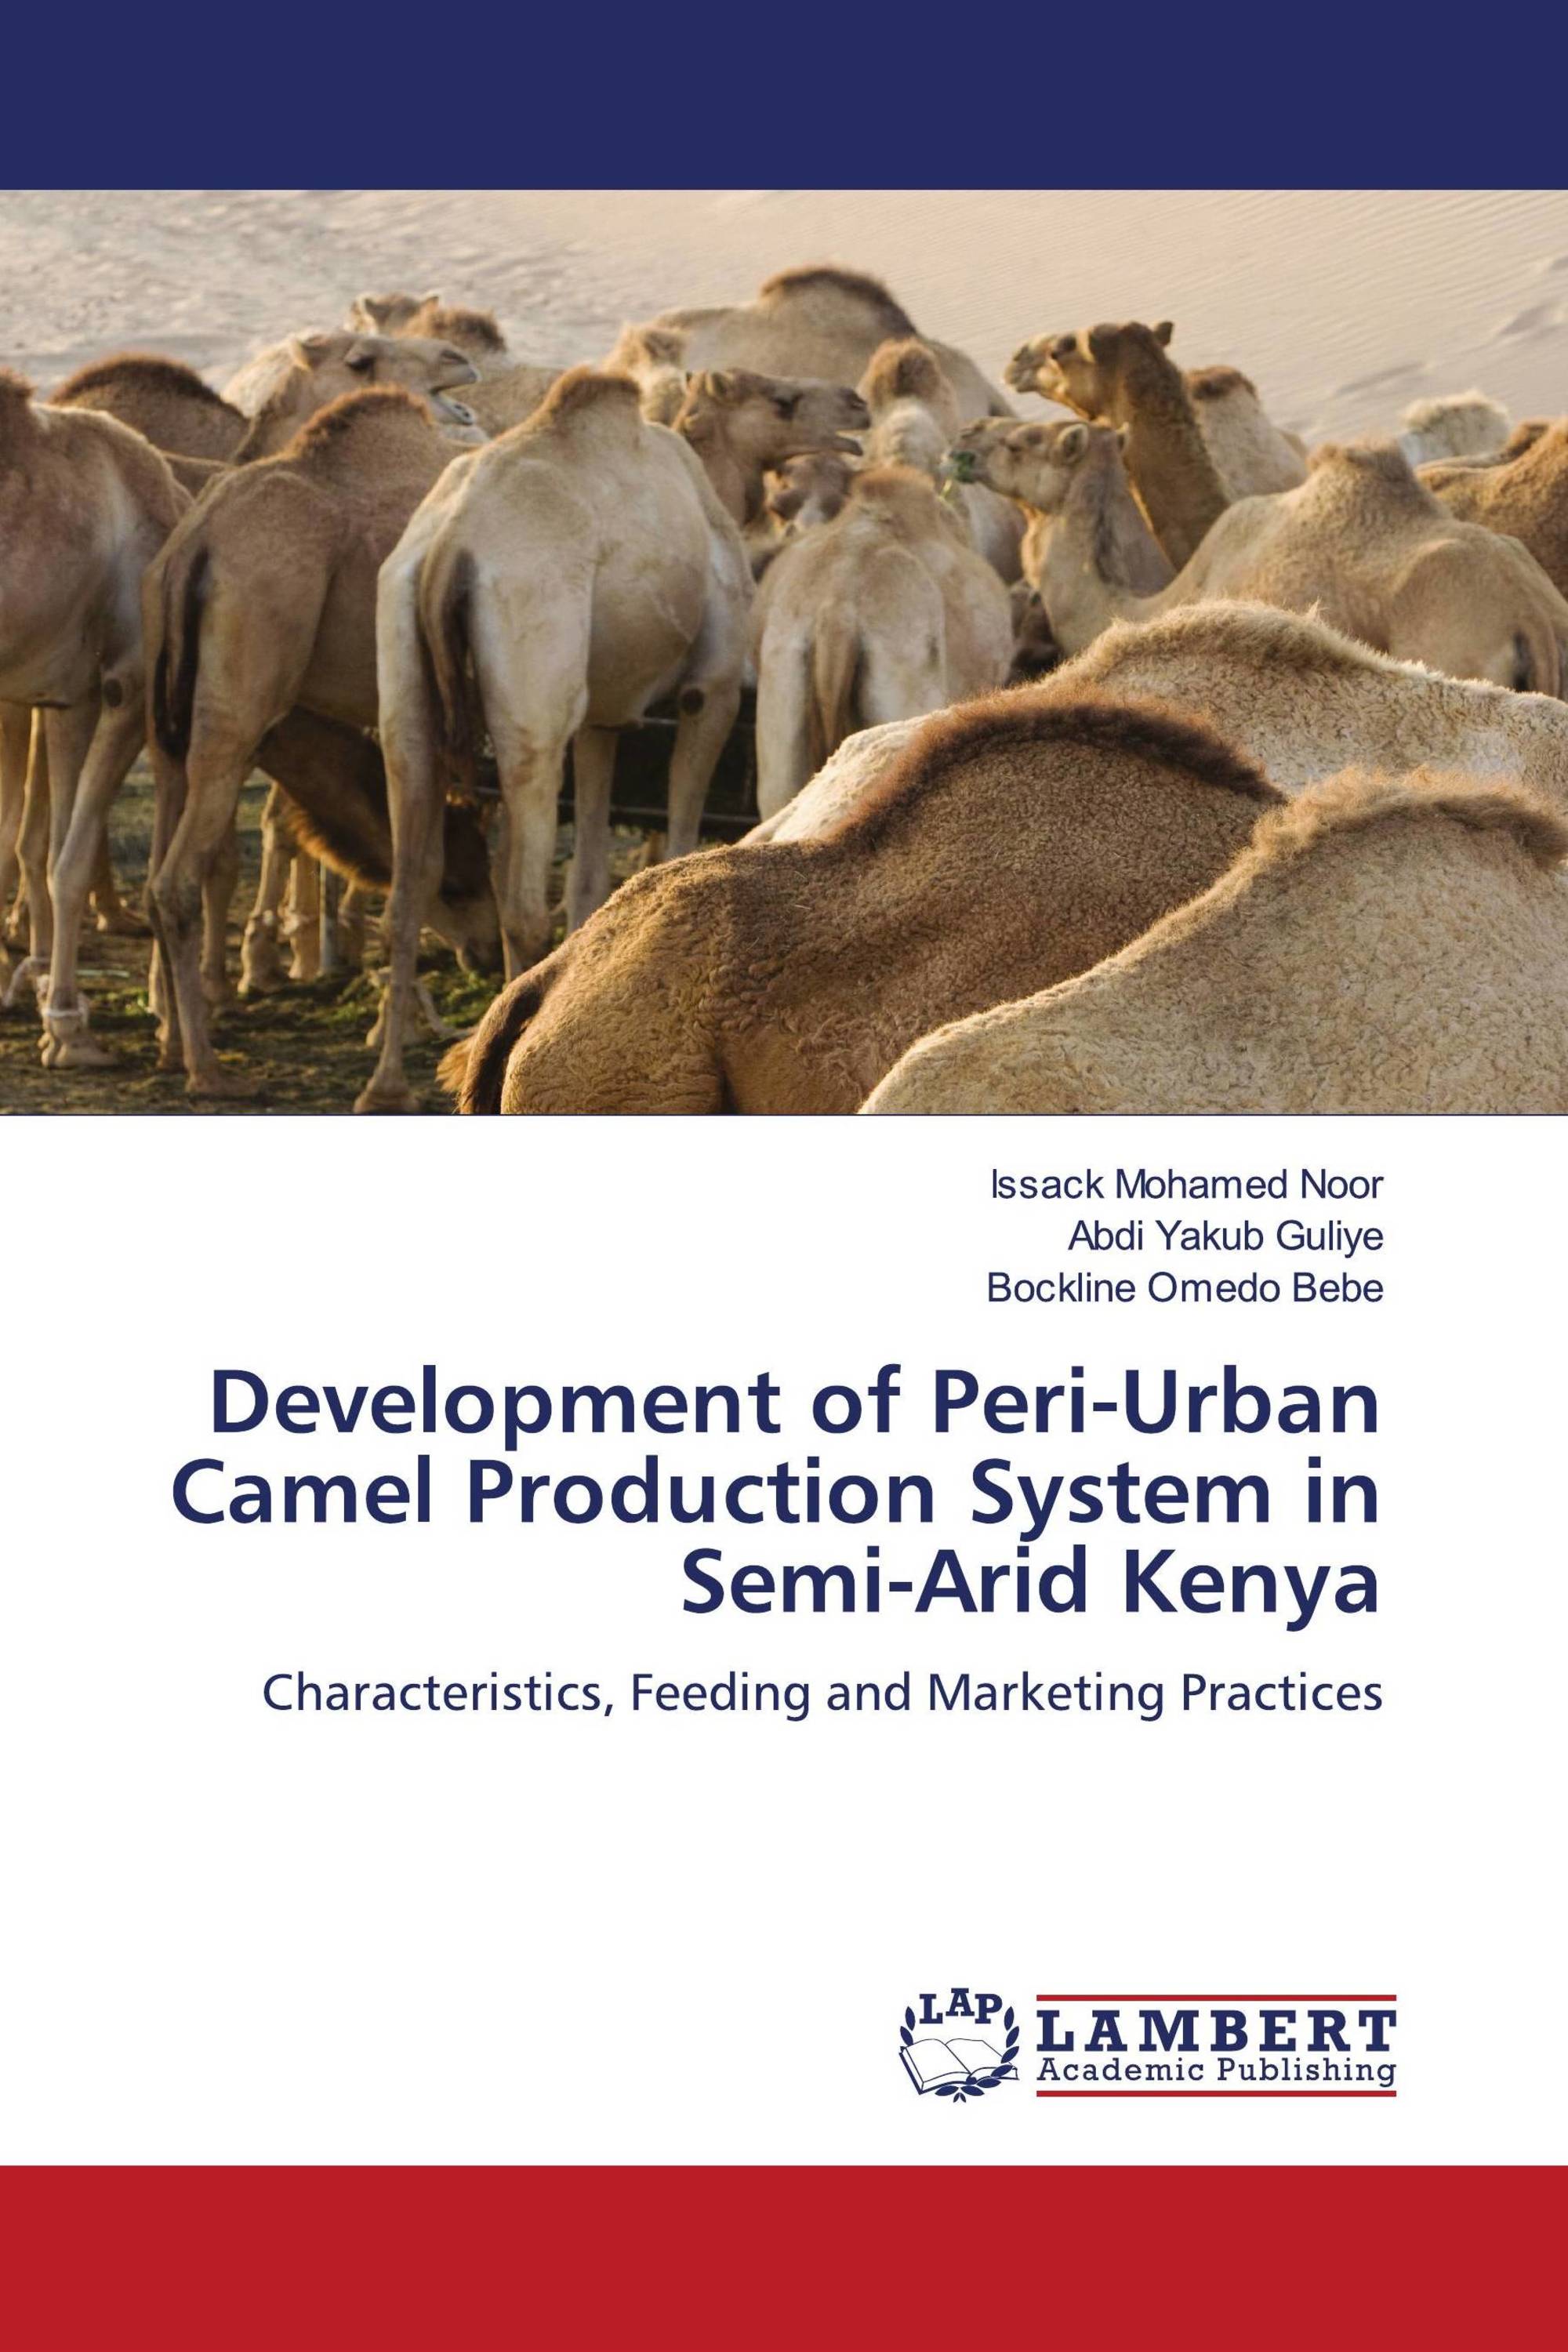 Development of Peri-Urban Camel Production System in Semi-Arid Kenya